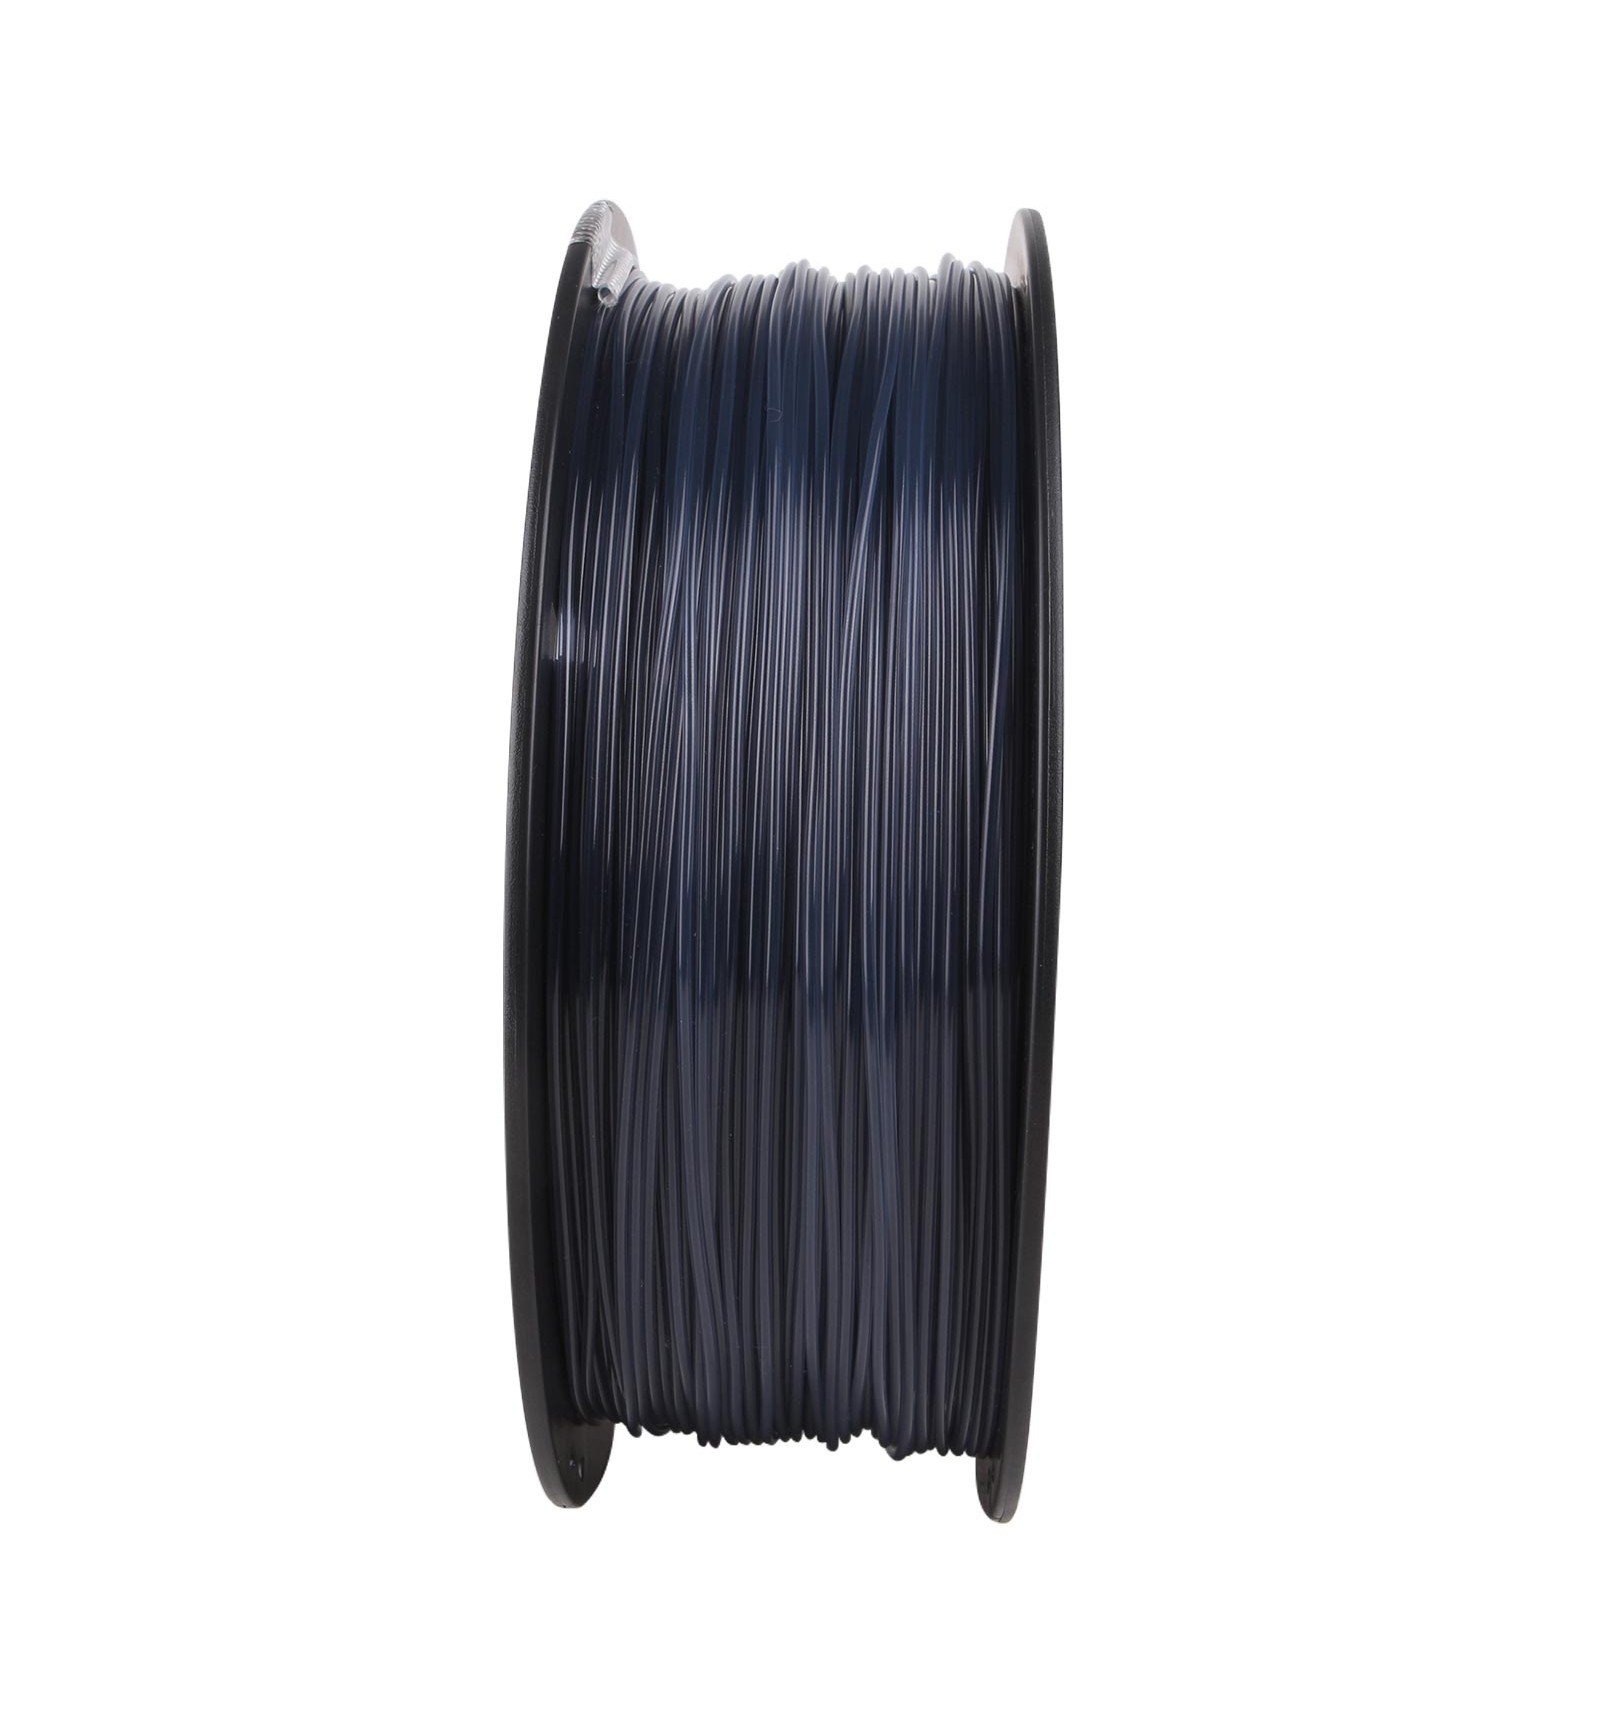 eSUN PETG Filament  1.75mm Grey – DIY Electronics